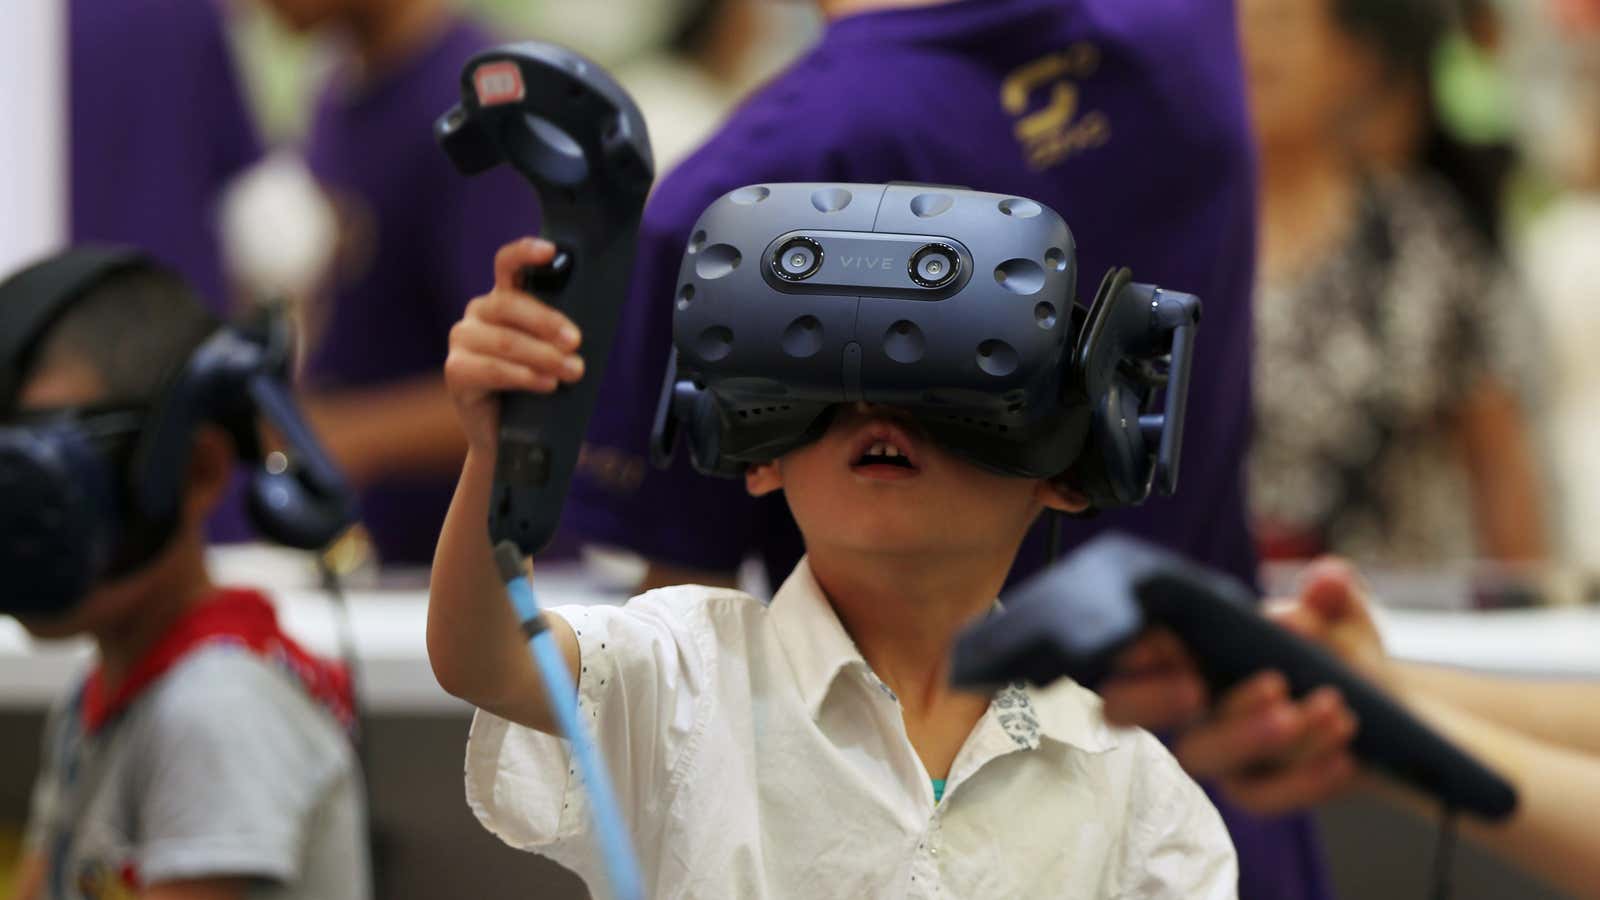 A child uses HTC’s Vive virtual reality headset.